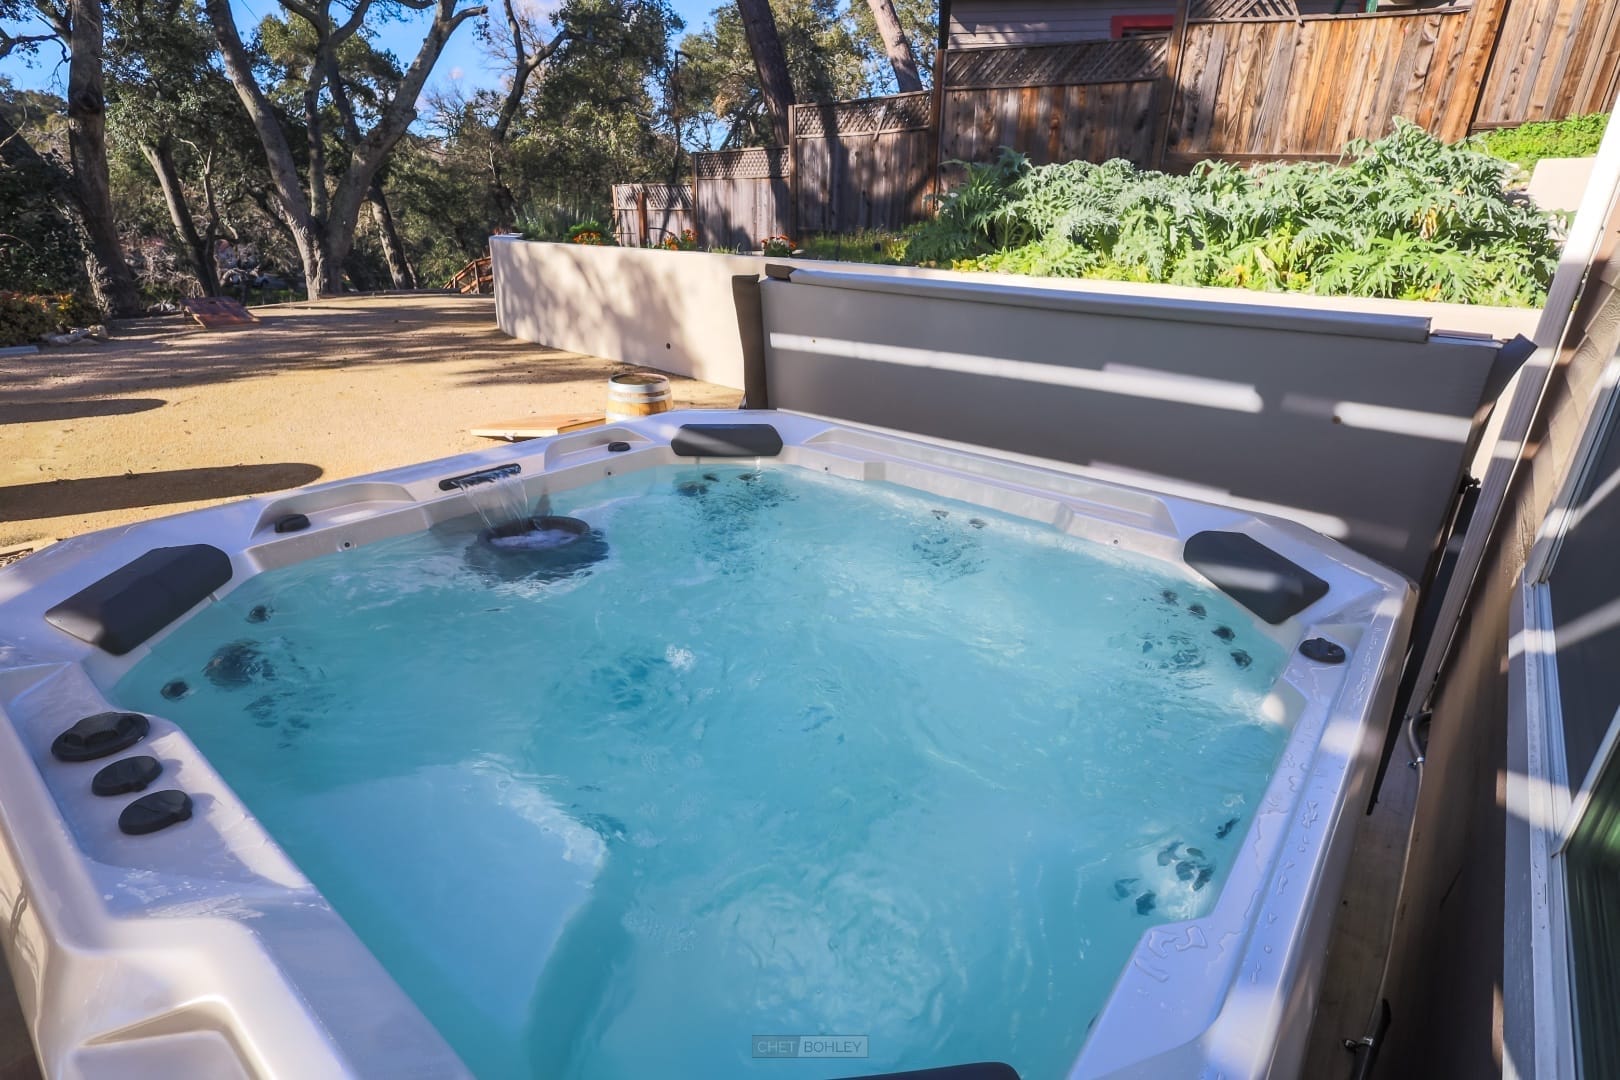 A vacation rental hot tub in a backyard near Pismo Beach.